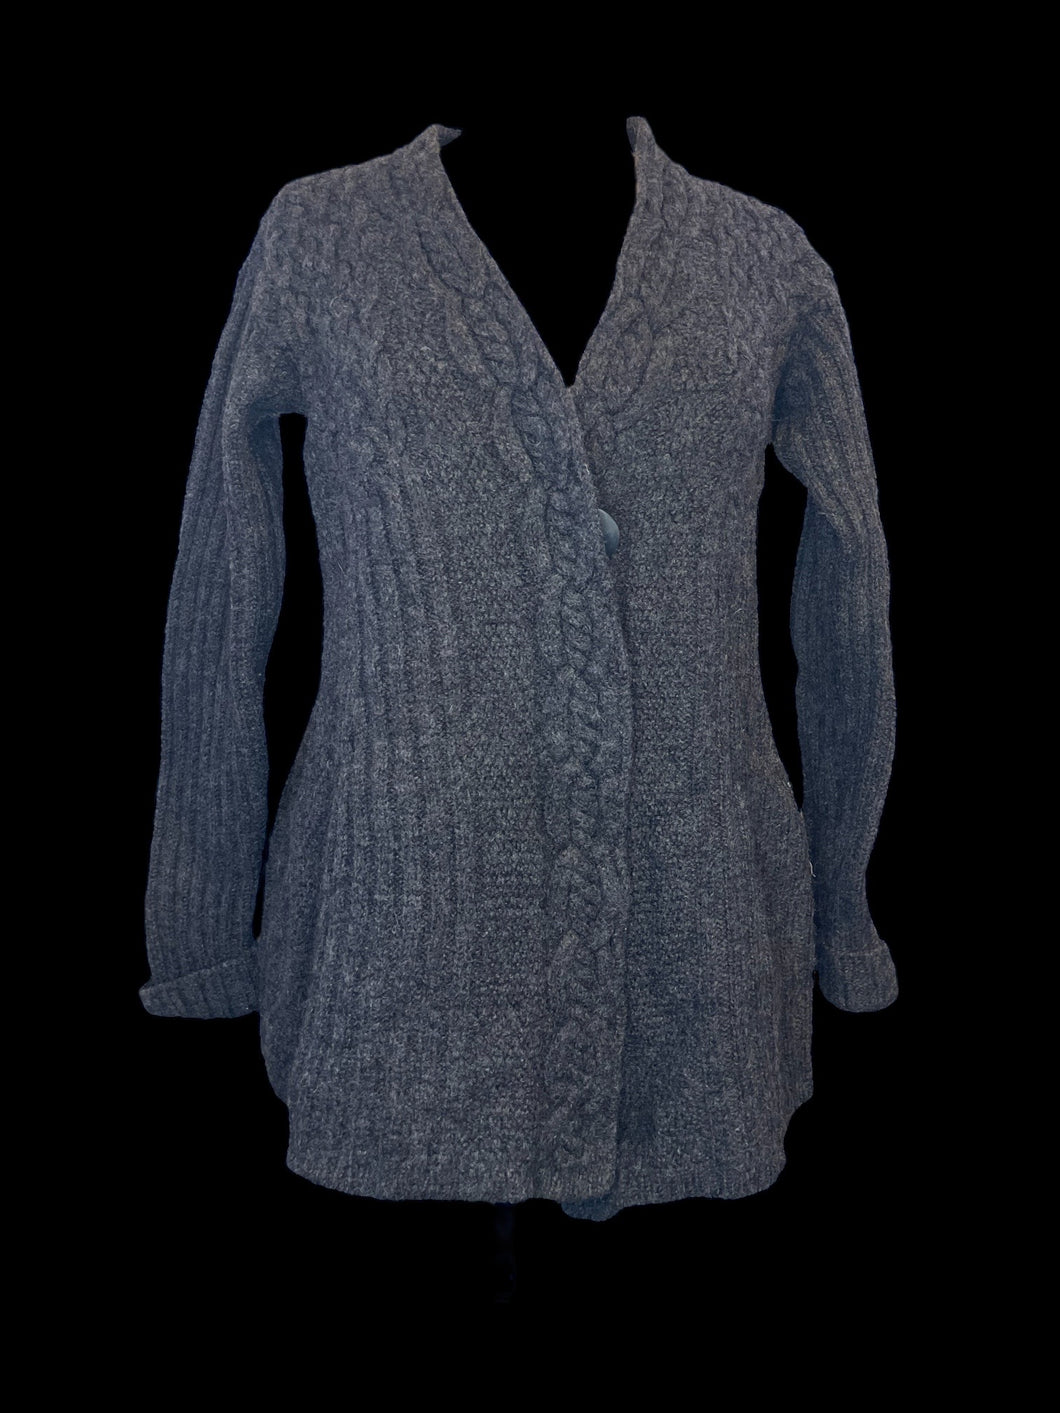 0X Dark heather grey wool long sleeve open front cardigan w/ single button closure, & folded cuffs